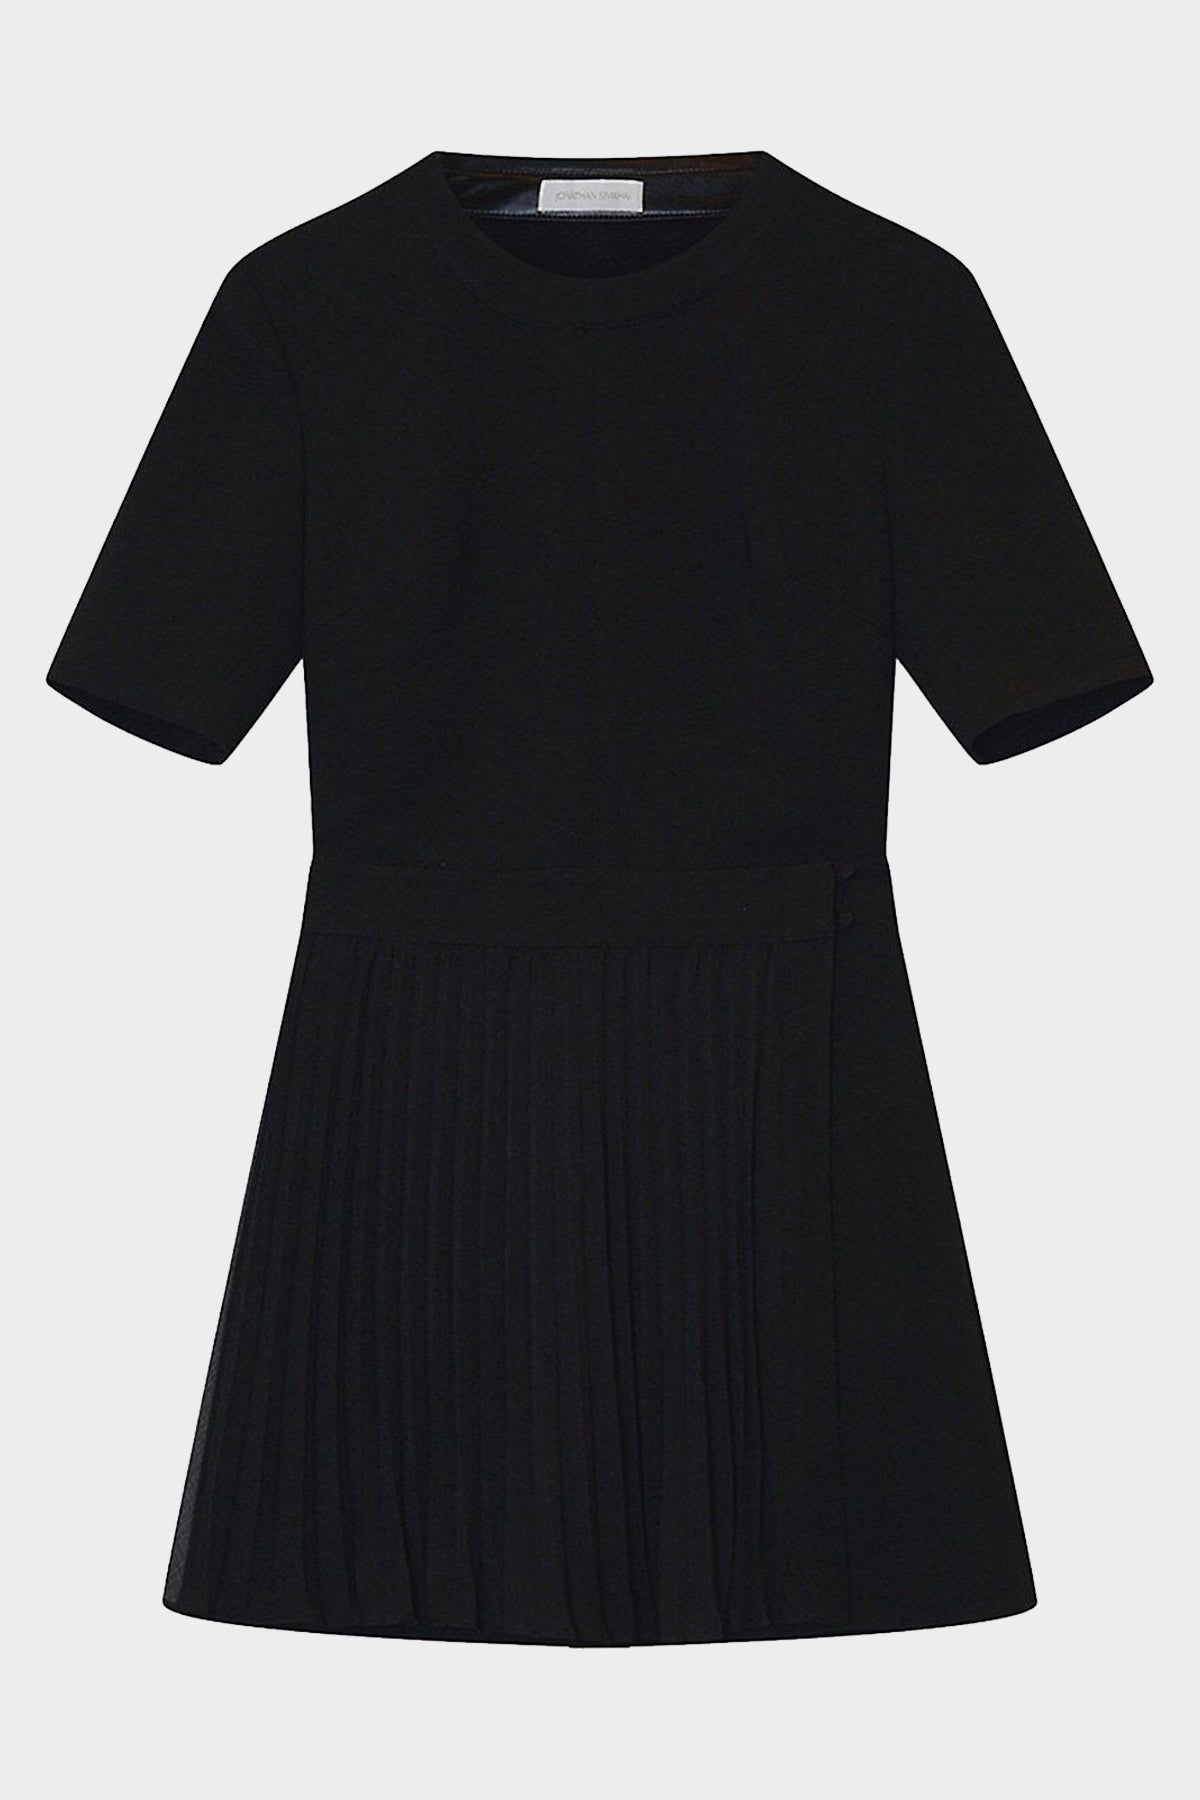 Tyra Wrap Mini Dress in Black - shop-olivia.com